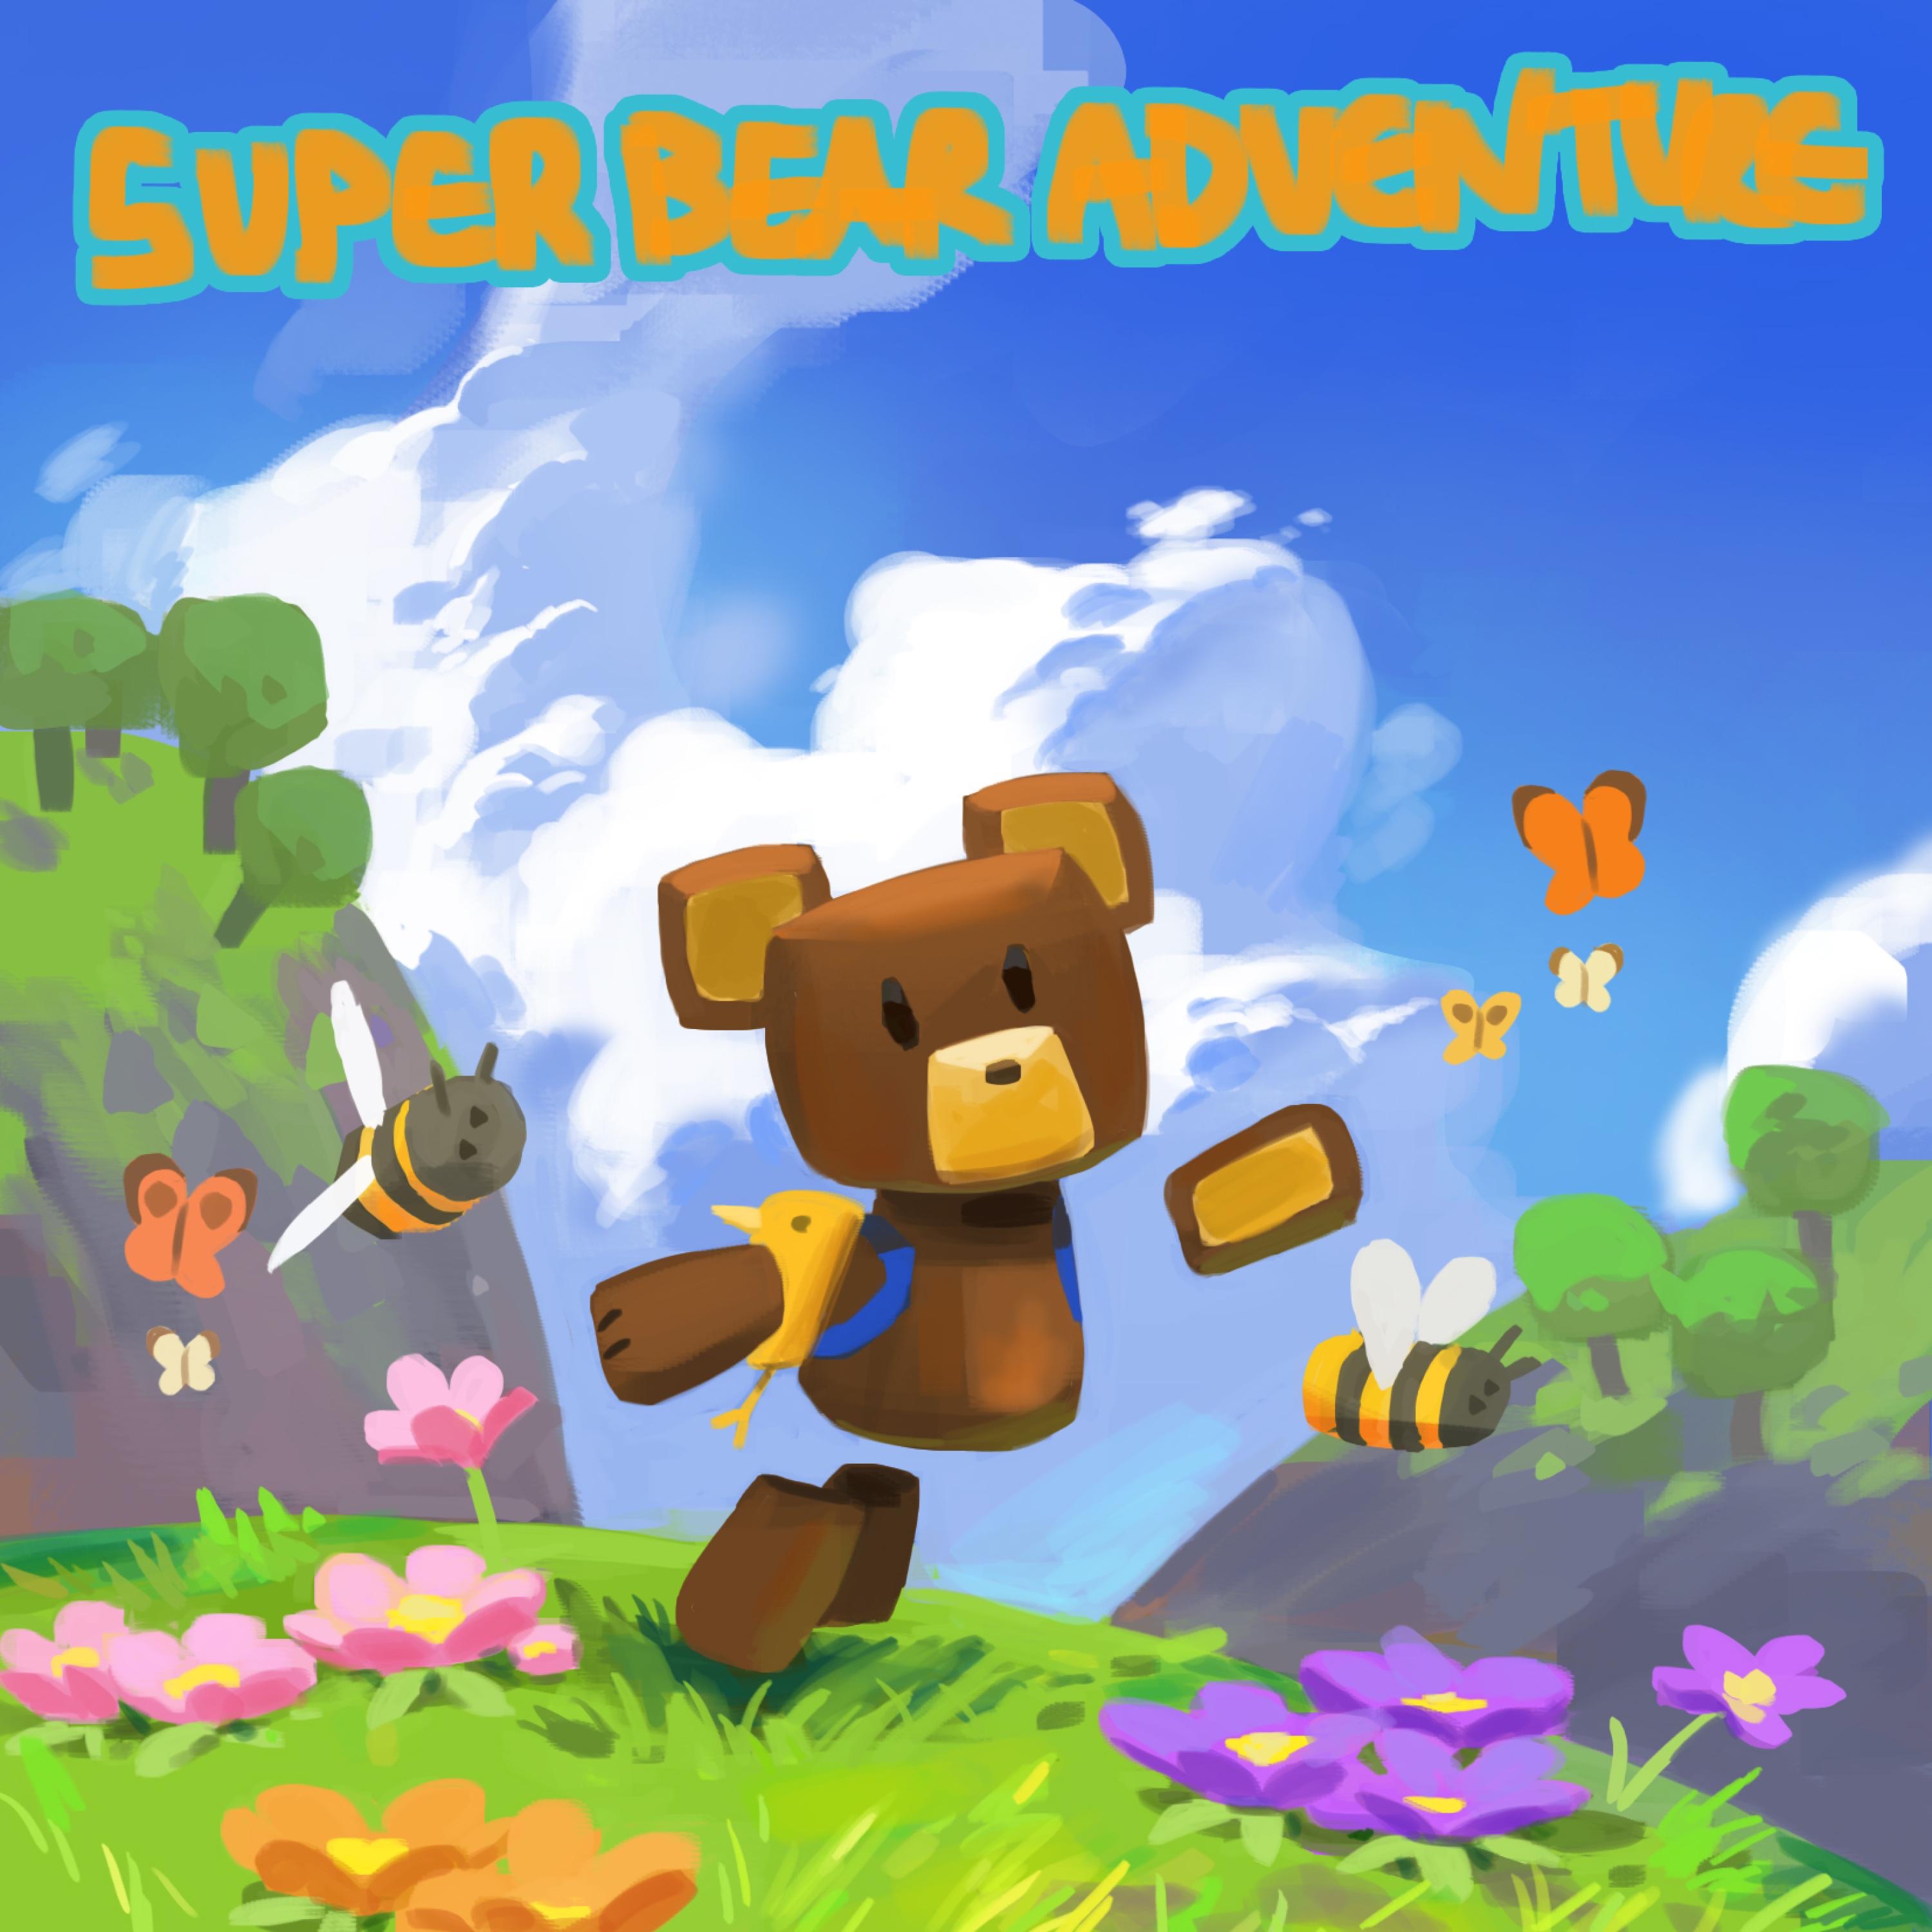 Sba super bear adventure. Bear Adventure игра. Супер Беар адвенчер. Приключения супер мишки. Супер беатвинчер.